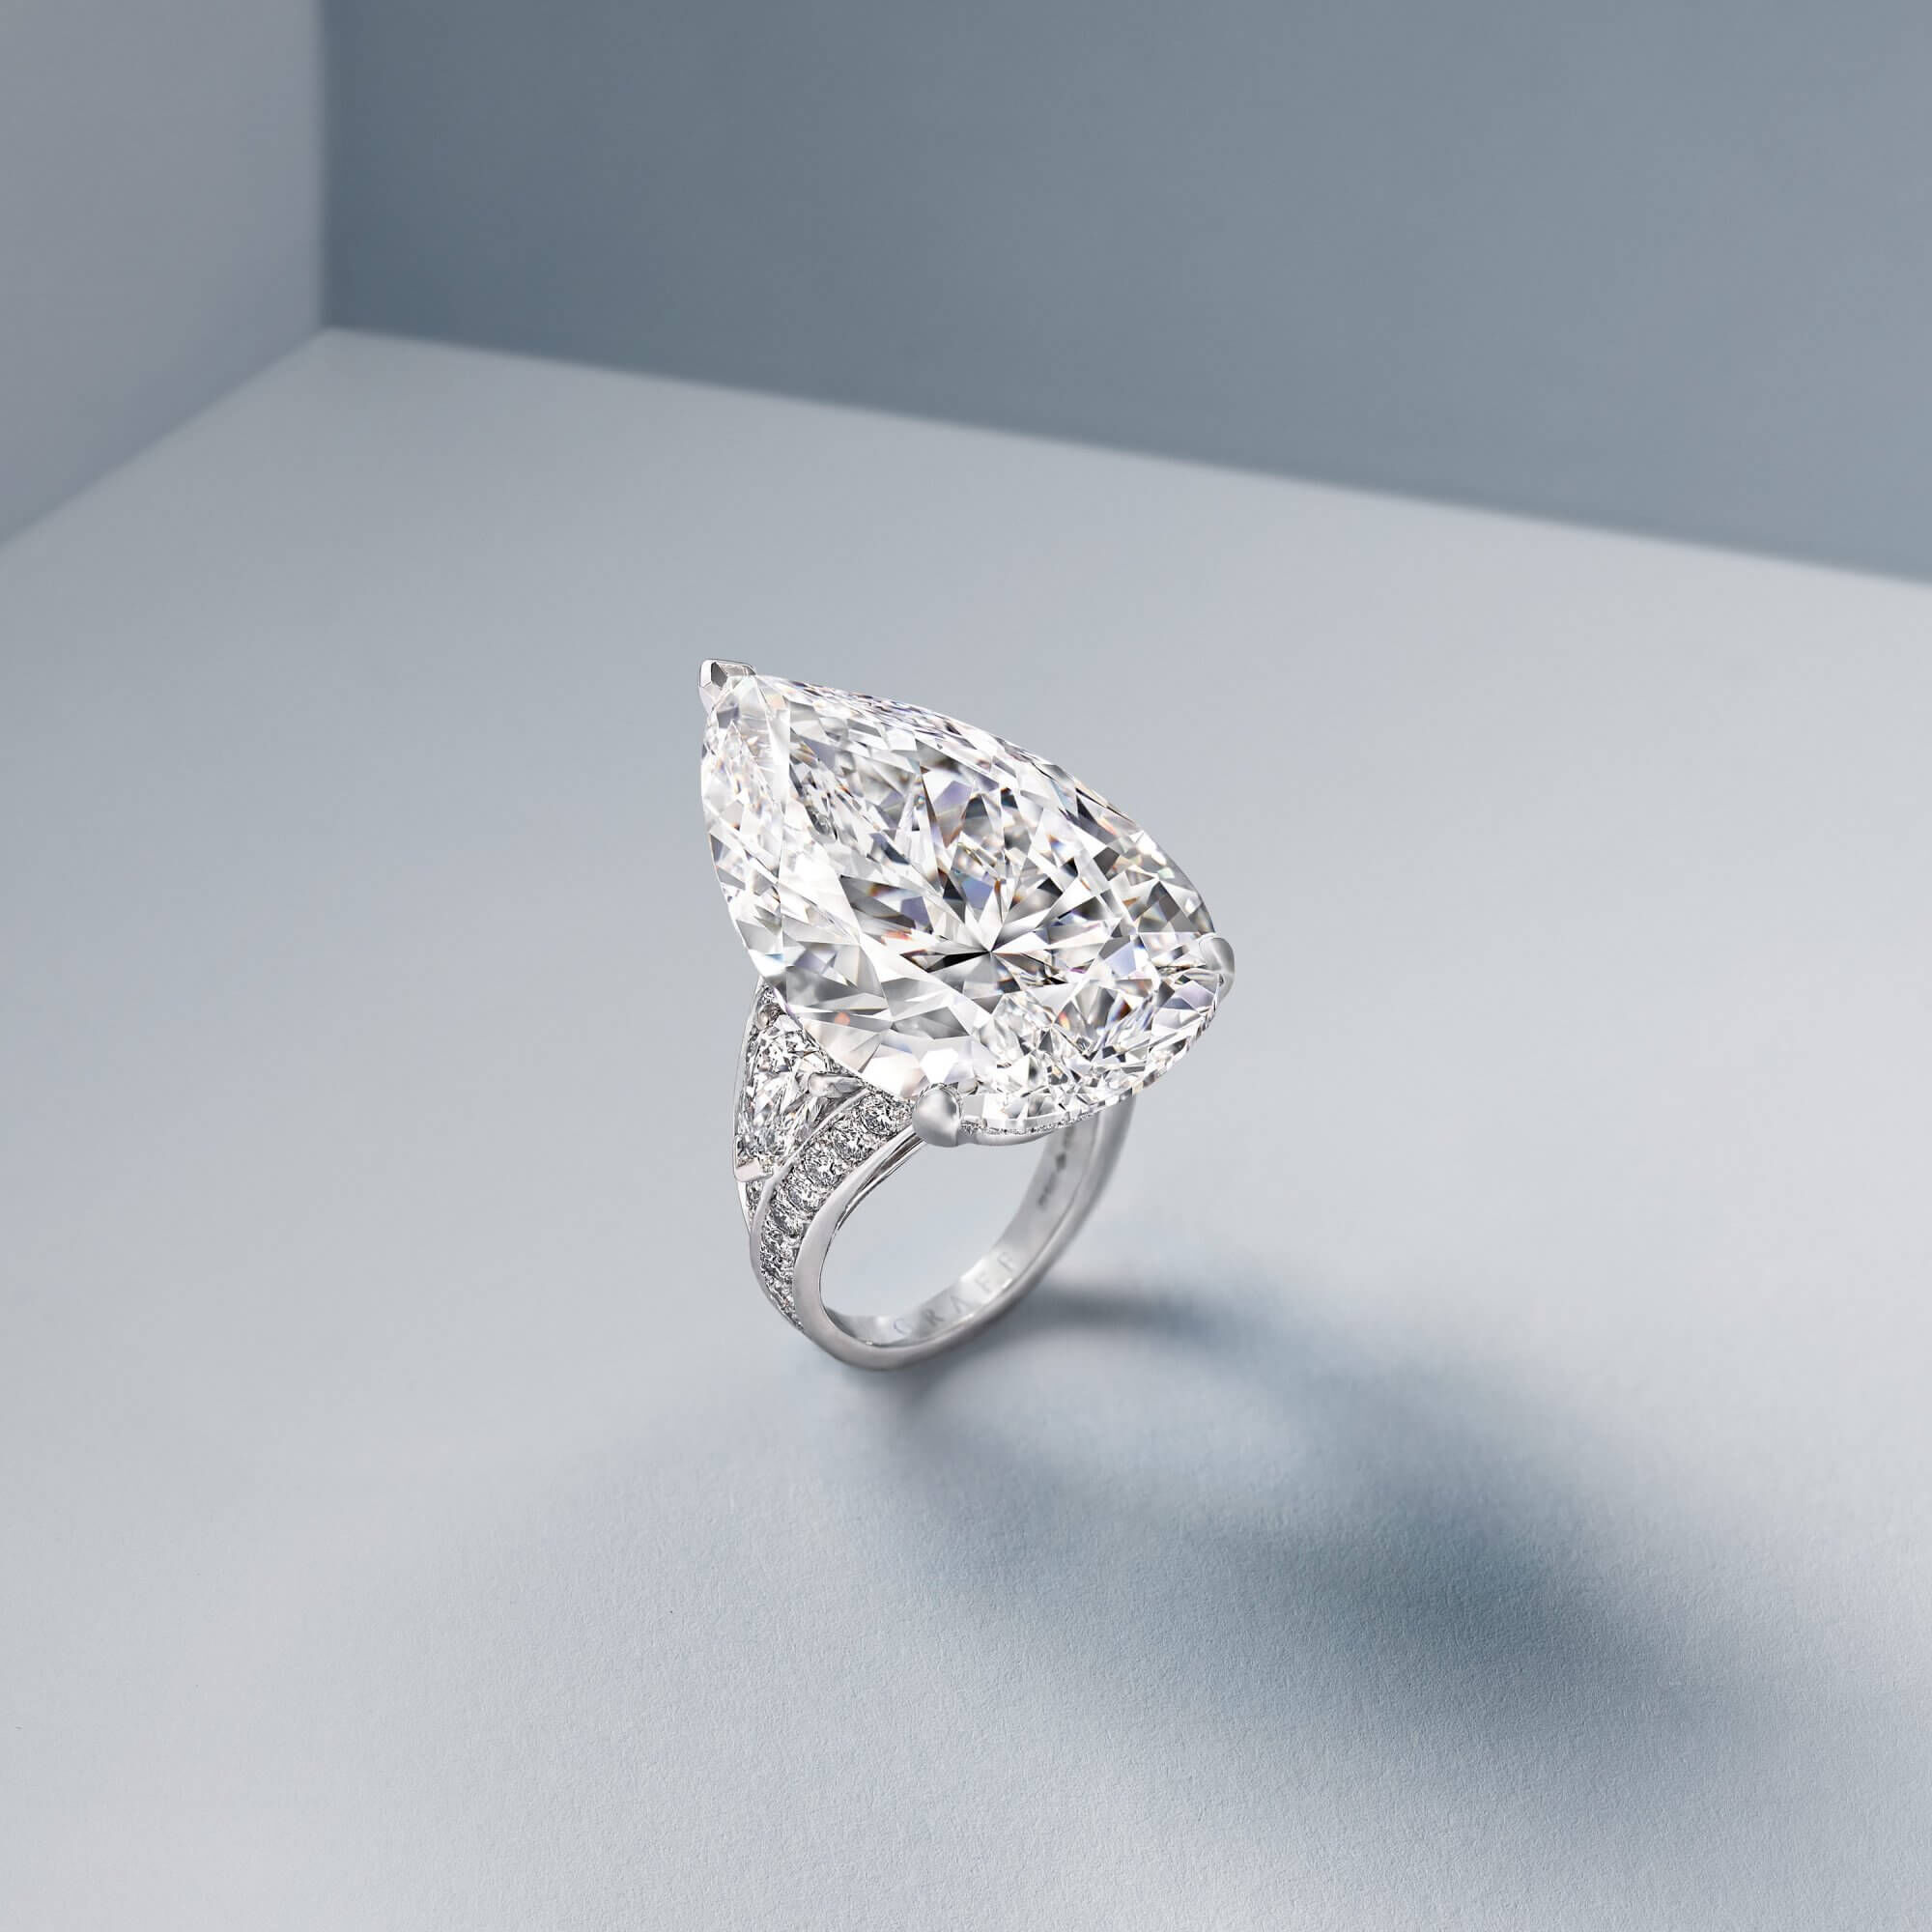 Graff Diamond Majesty a 38.13 carat D Flawless pear shape diamond ring